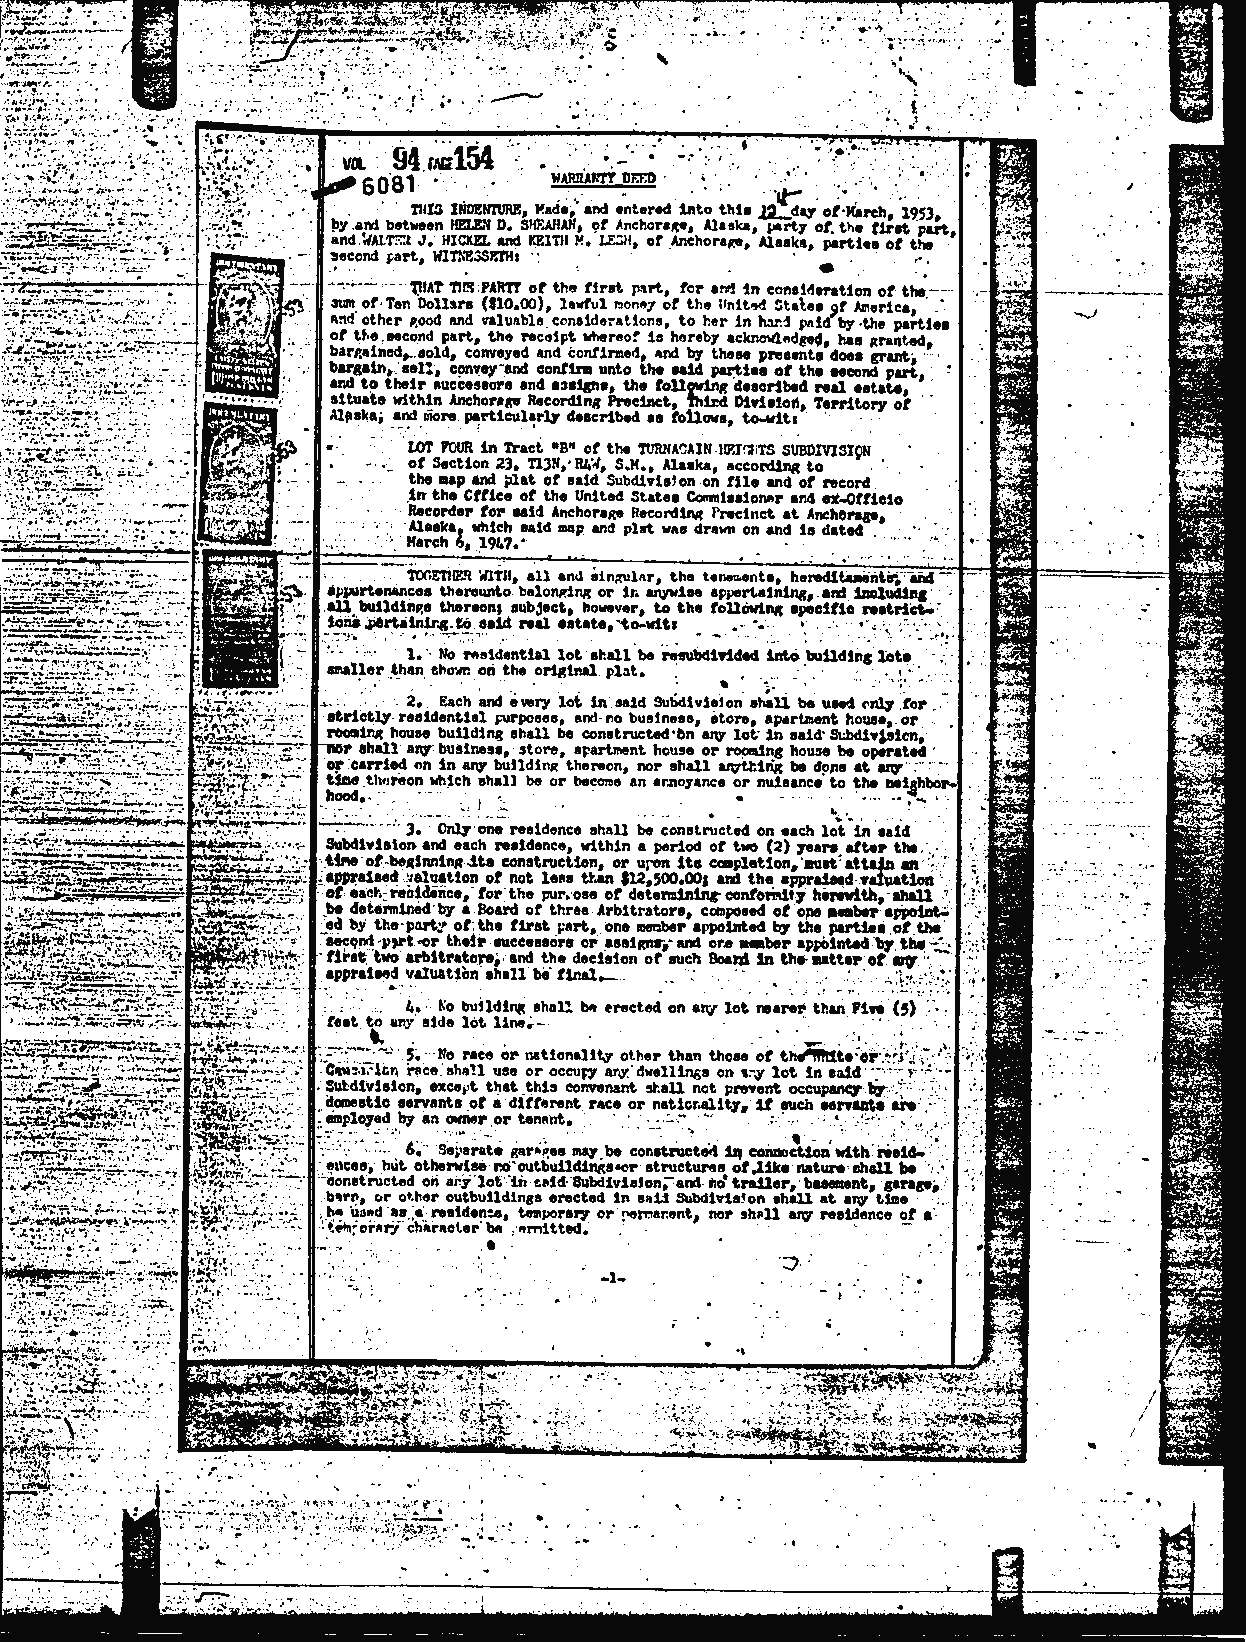 Warranty Deed of 1953, entire document.